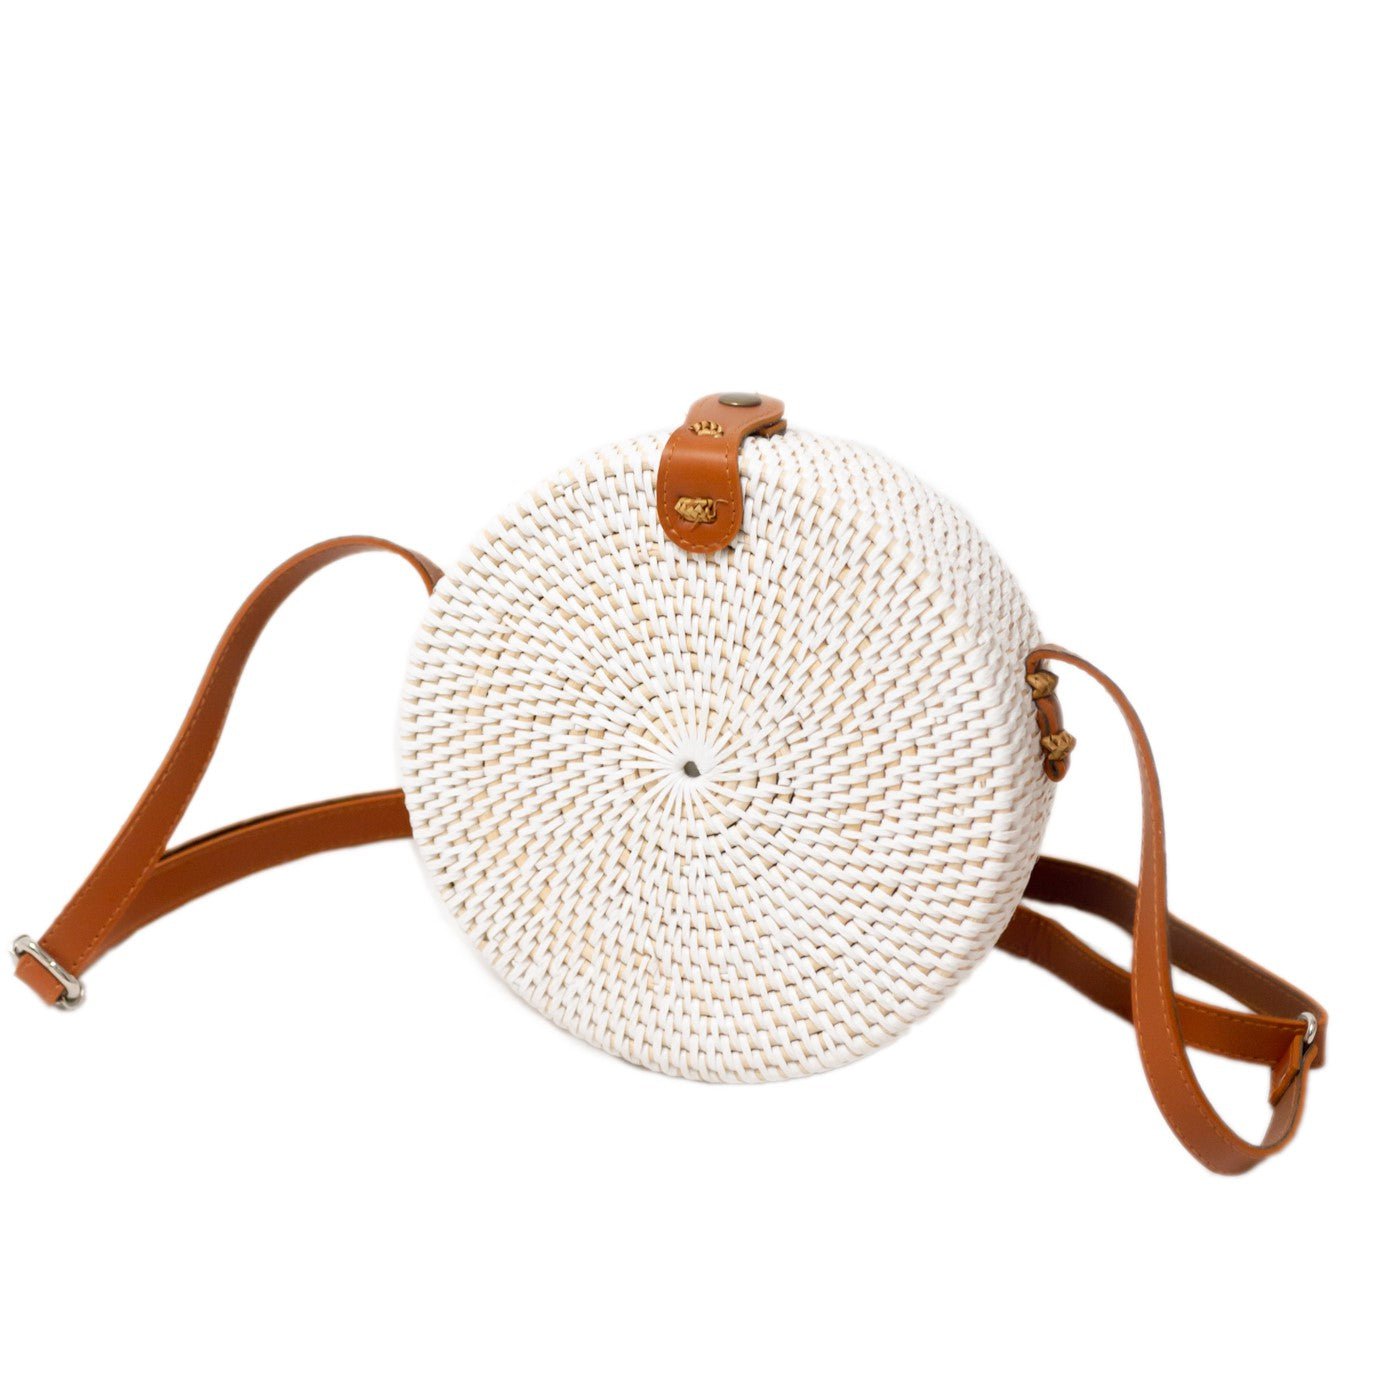 Round Rattan Bag | White Handmade Crossbody Bag with Synthetic Leather Straps | Shoulder Bag | Boho Bali Bag SENJA (white)